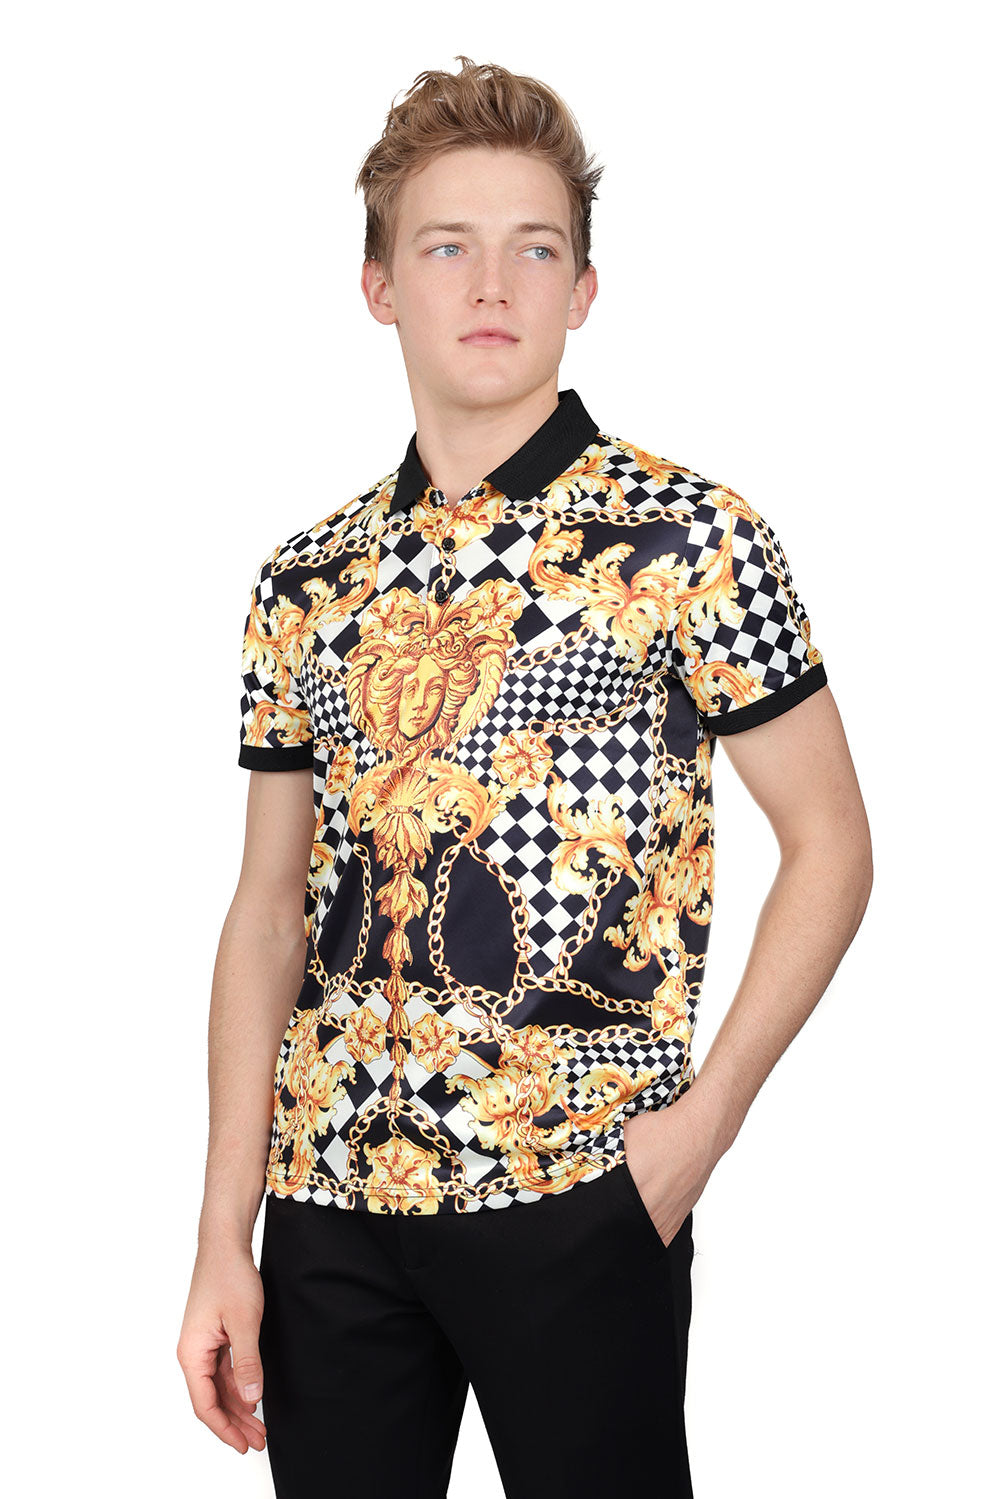 Barabas Men's Medusa Chain Checkered Floral Baroque Polo Shirt PSP2037